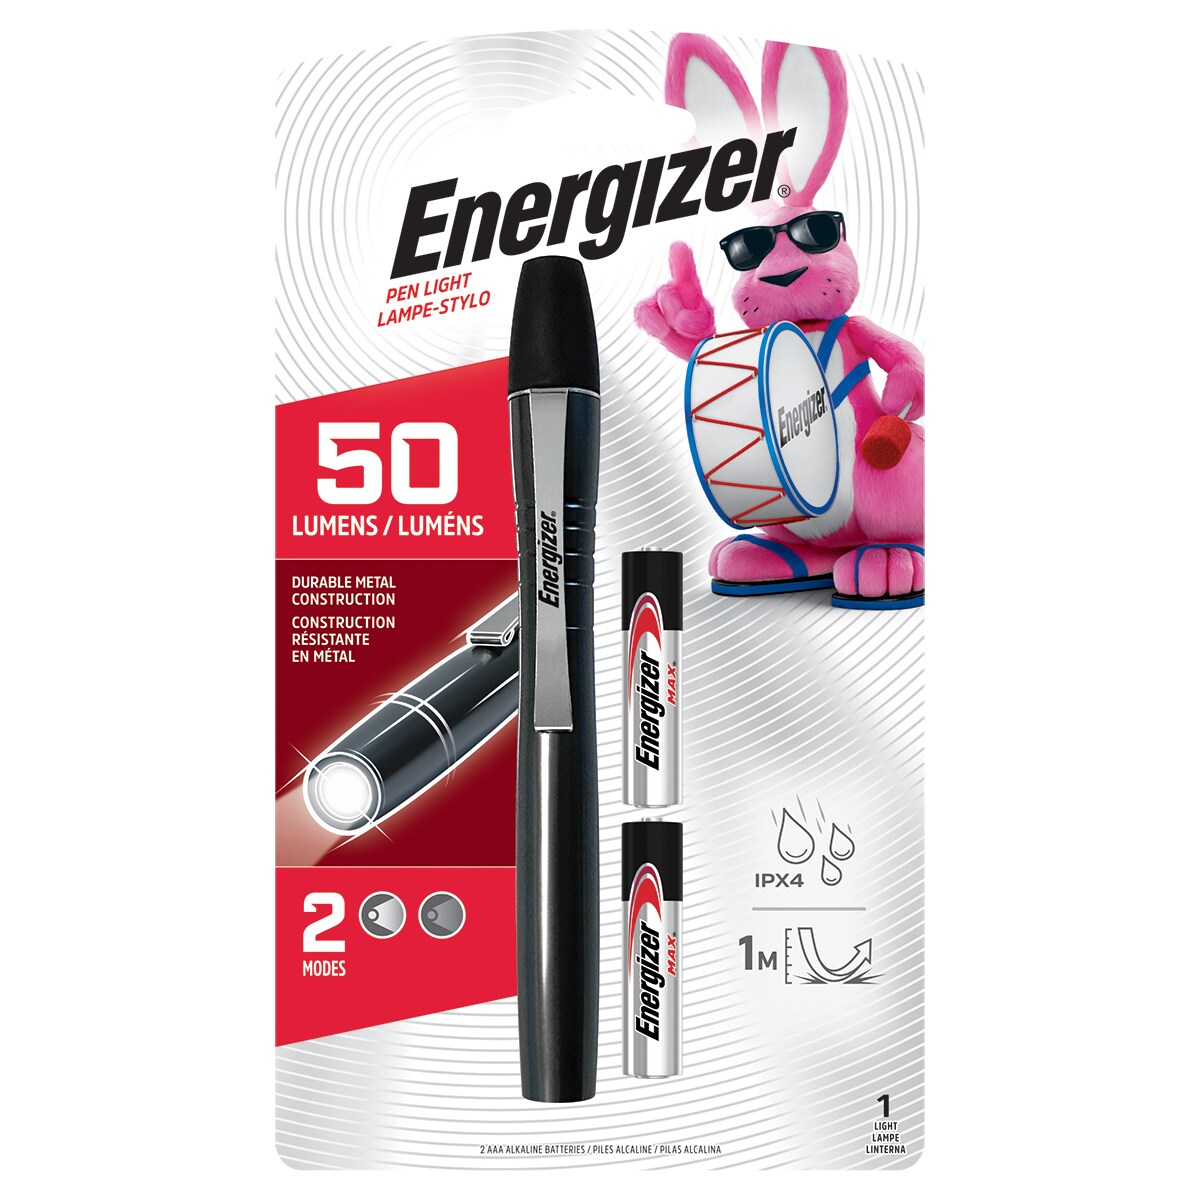 Energizer® Weather Ready® Floating Waterproof Flashlight 100 Lumens  Flashlight, 1 ct - Ralphs